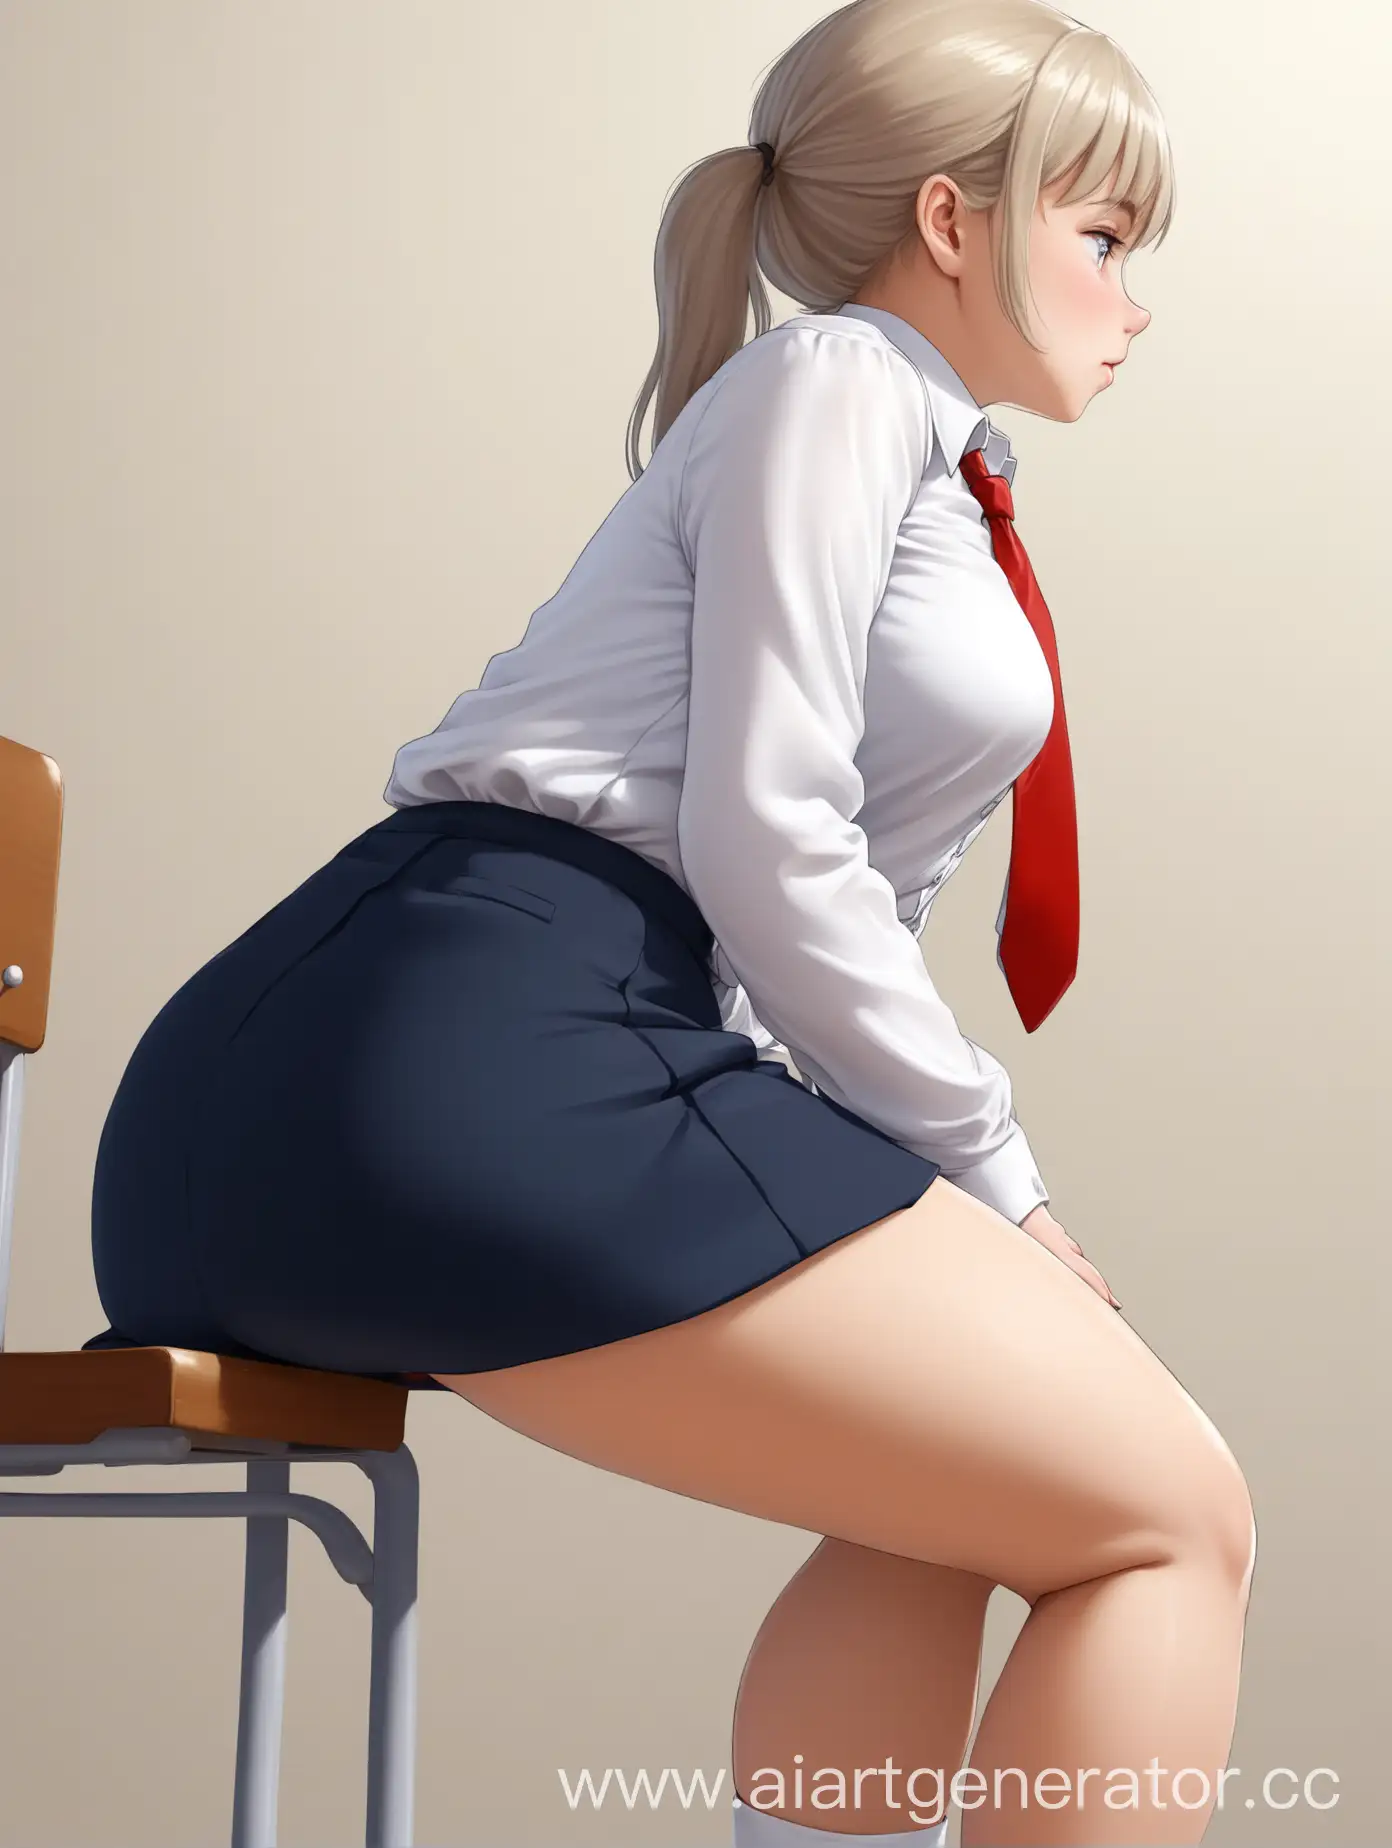 Russian-Schoolgirl-in-Formal-Attire-Sitting-with-Bent-Legs